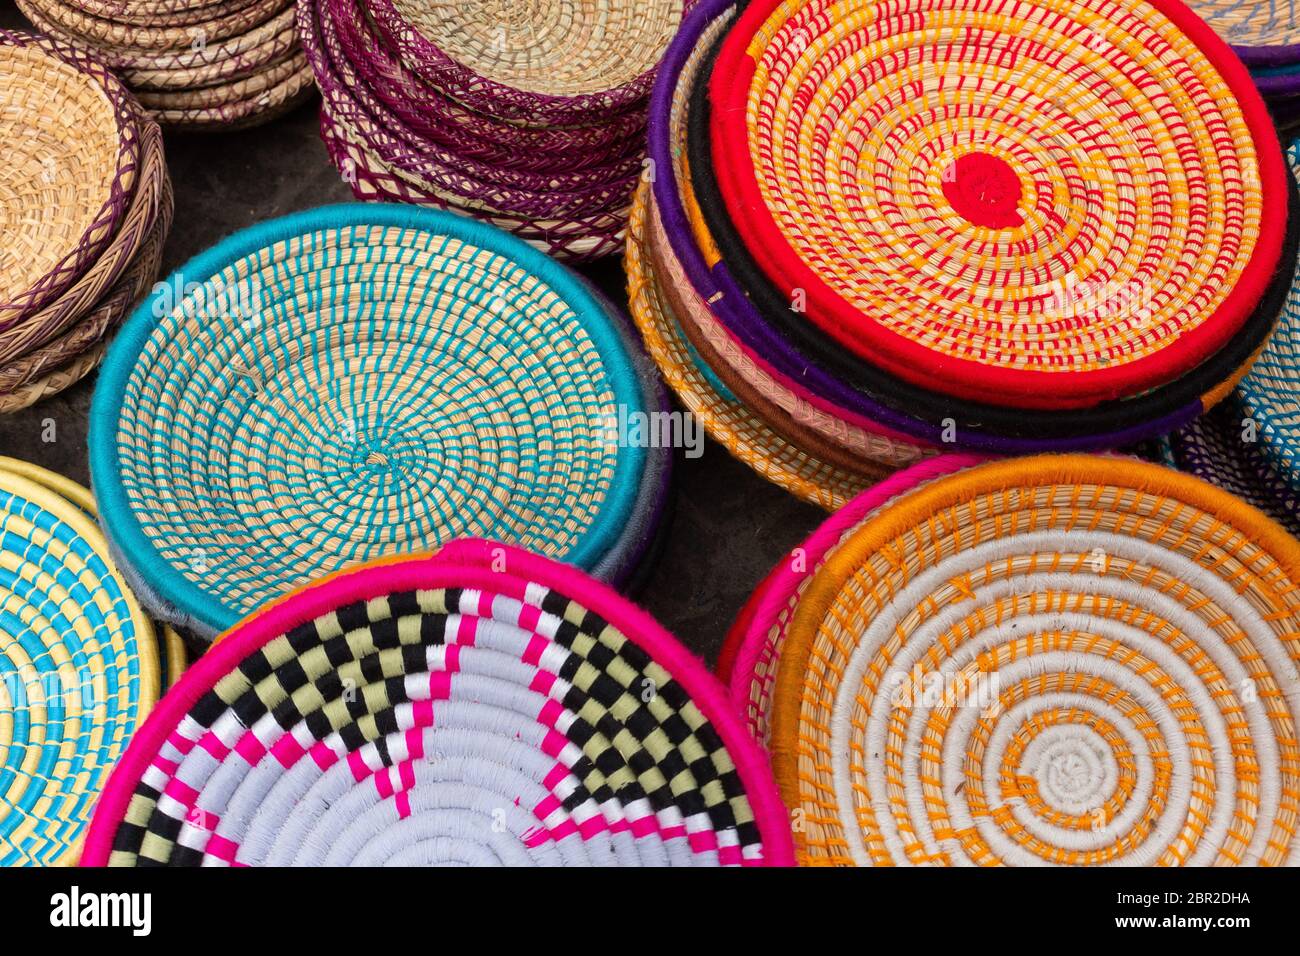 cestas de mimbre hechas a mano de varios colores Fotografía de stock - Alamy